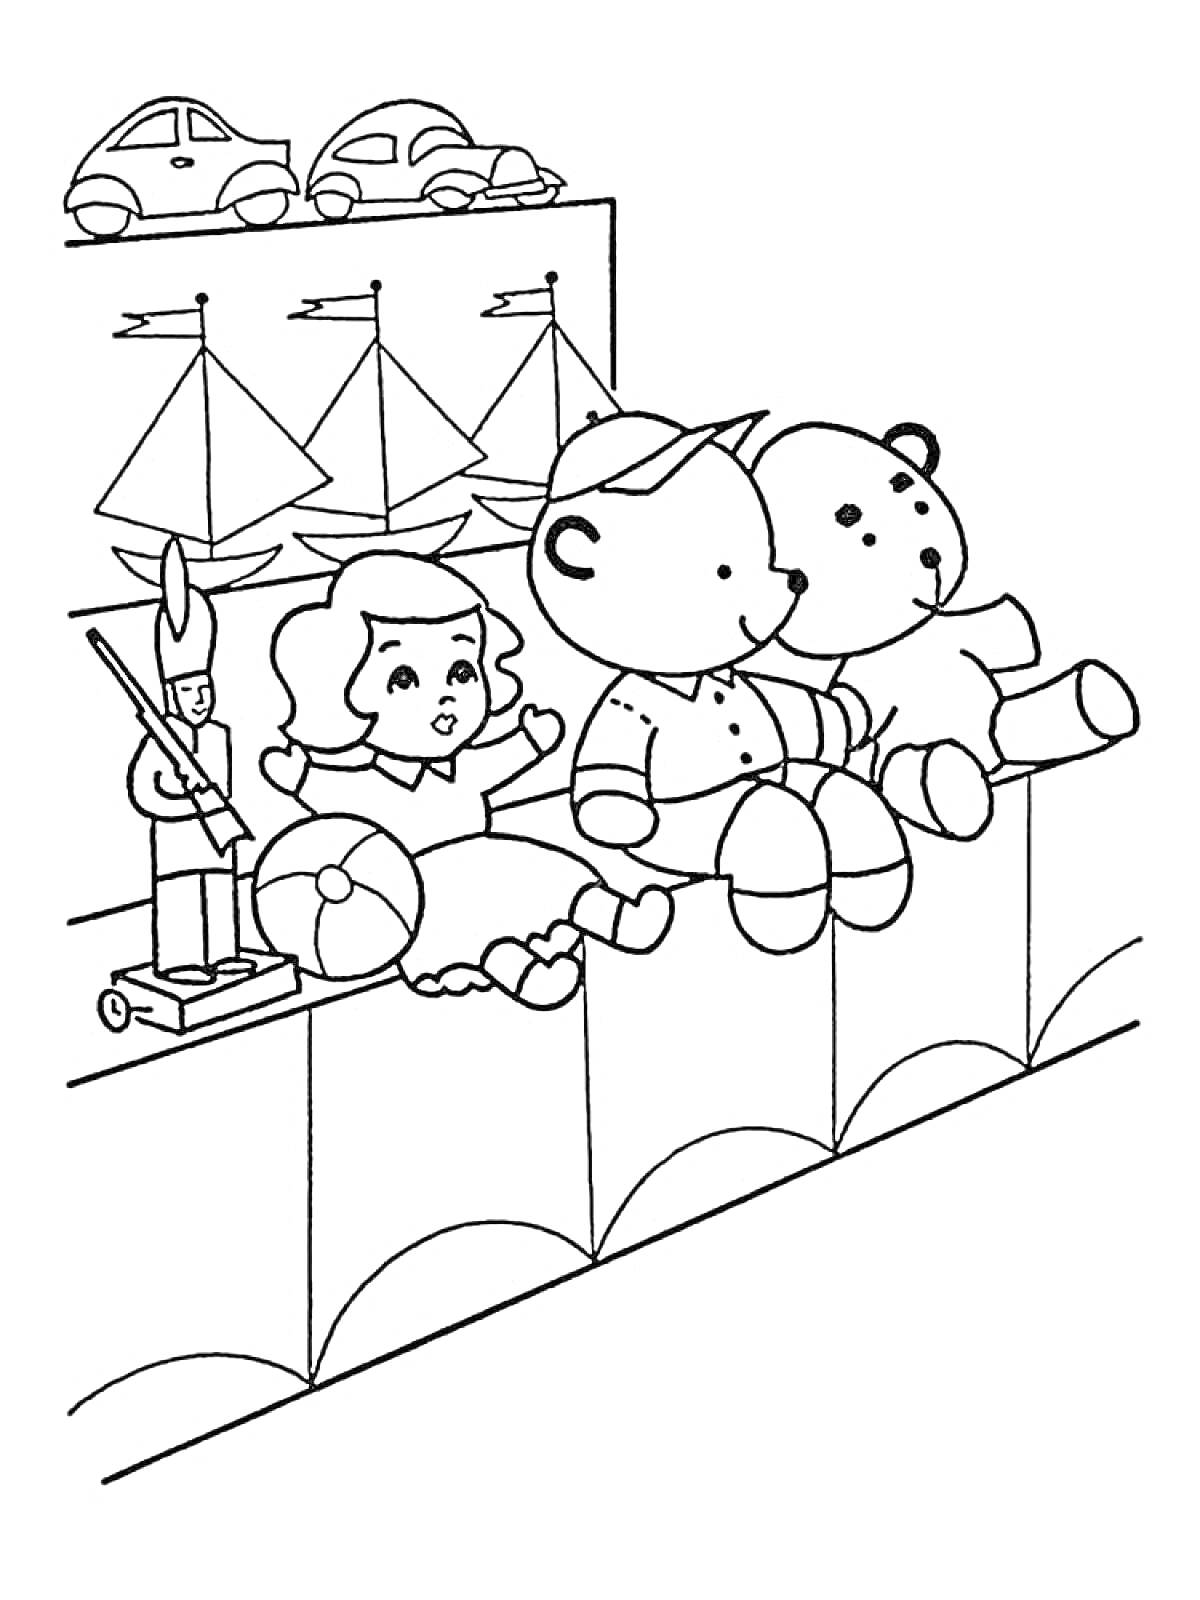 На раскраске изображено: Магазин игрушек, Парусники, Кукла, Игрушки, Полки, Авто